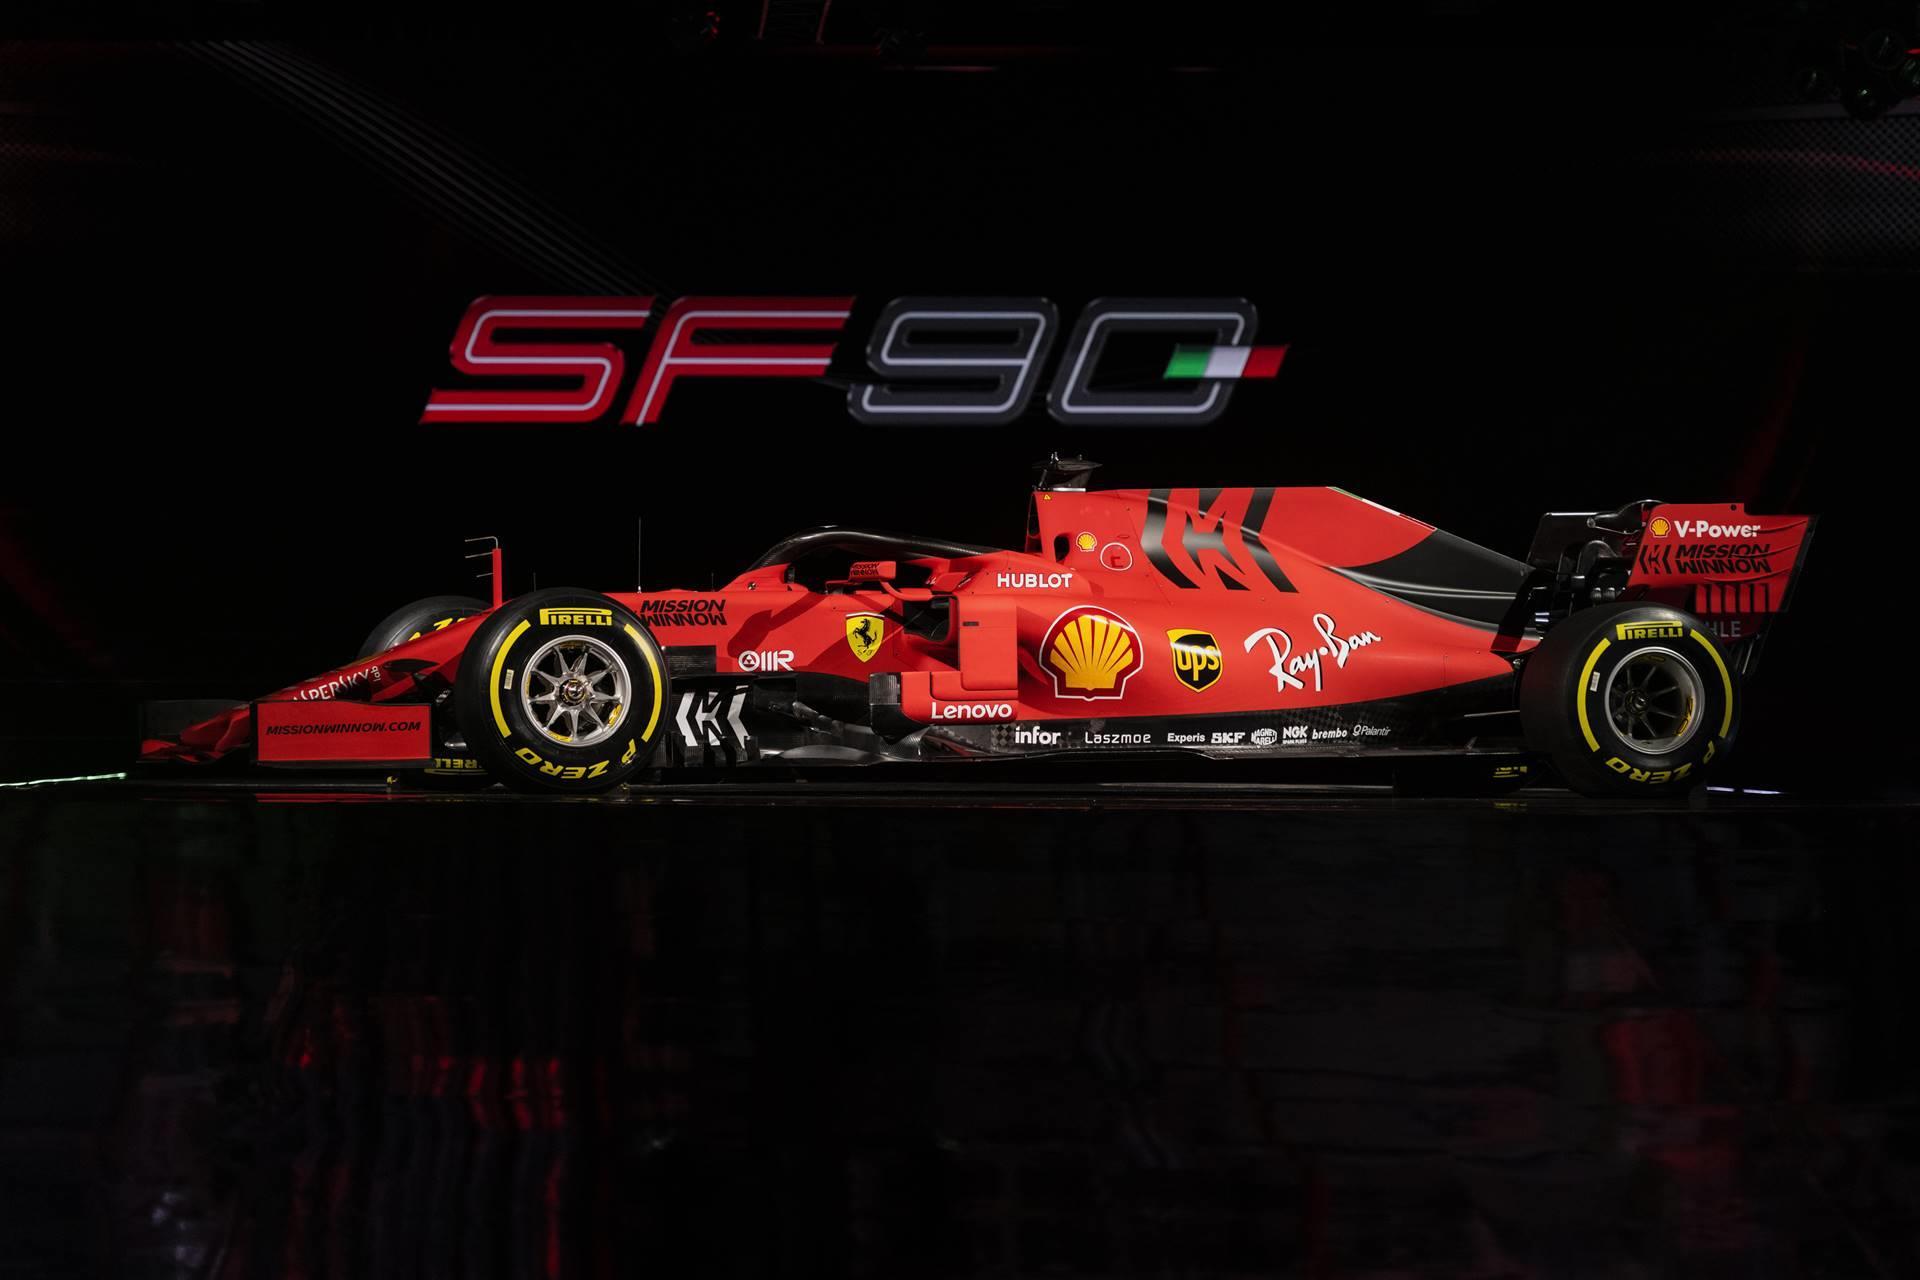 Ferrari SF90 Wallpaper and Image Gallery